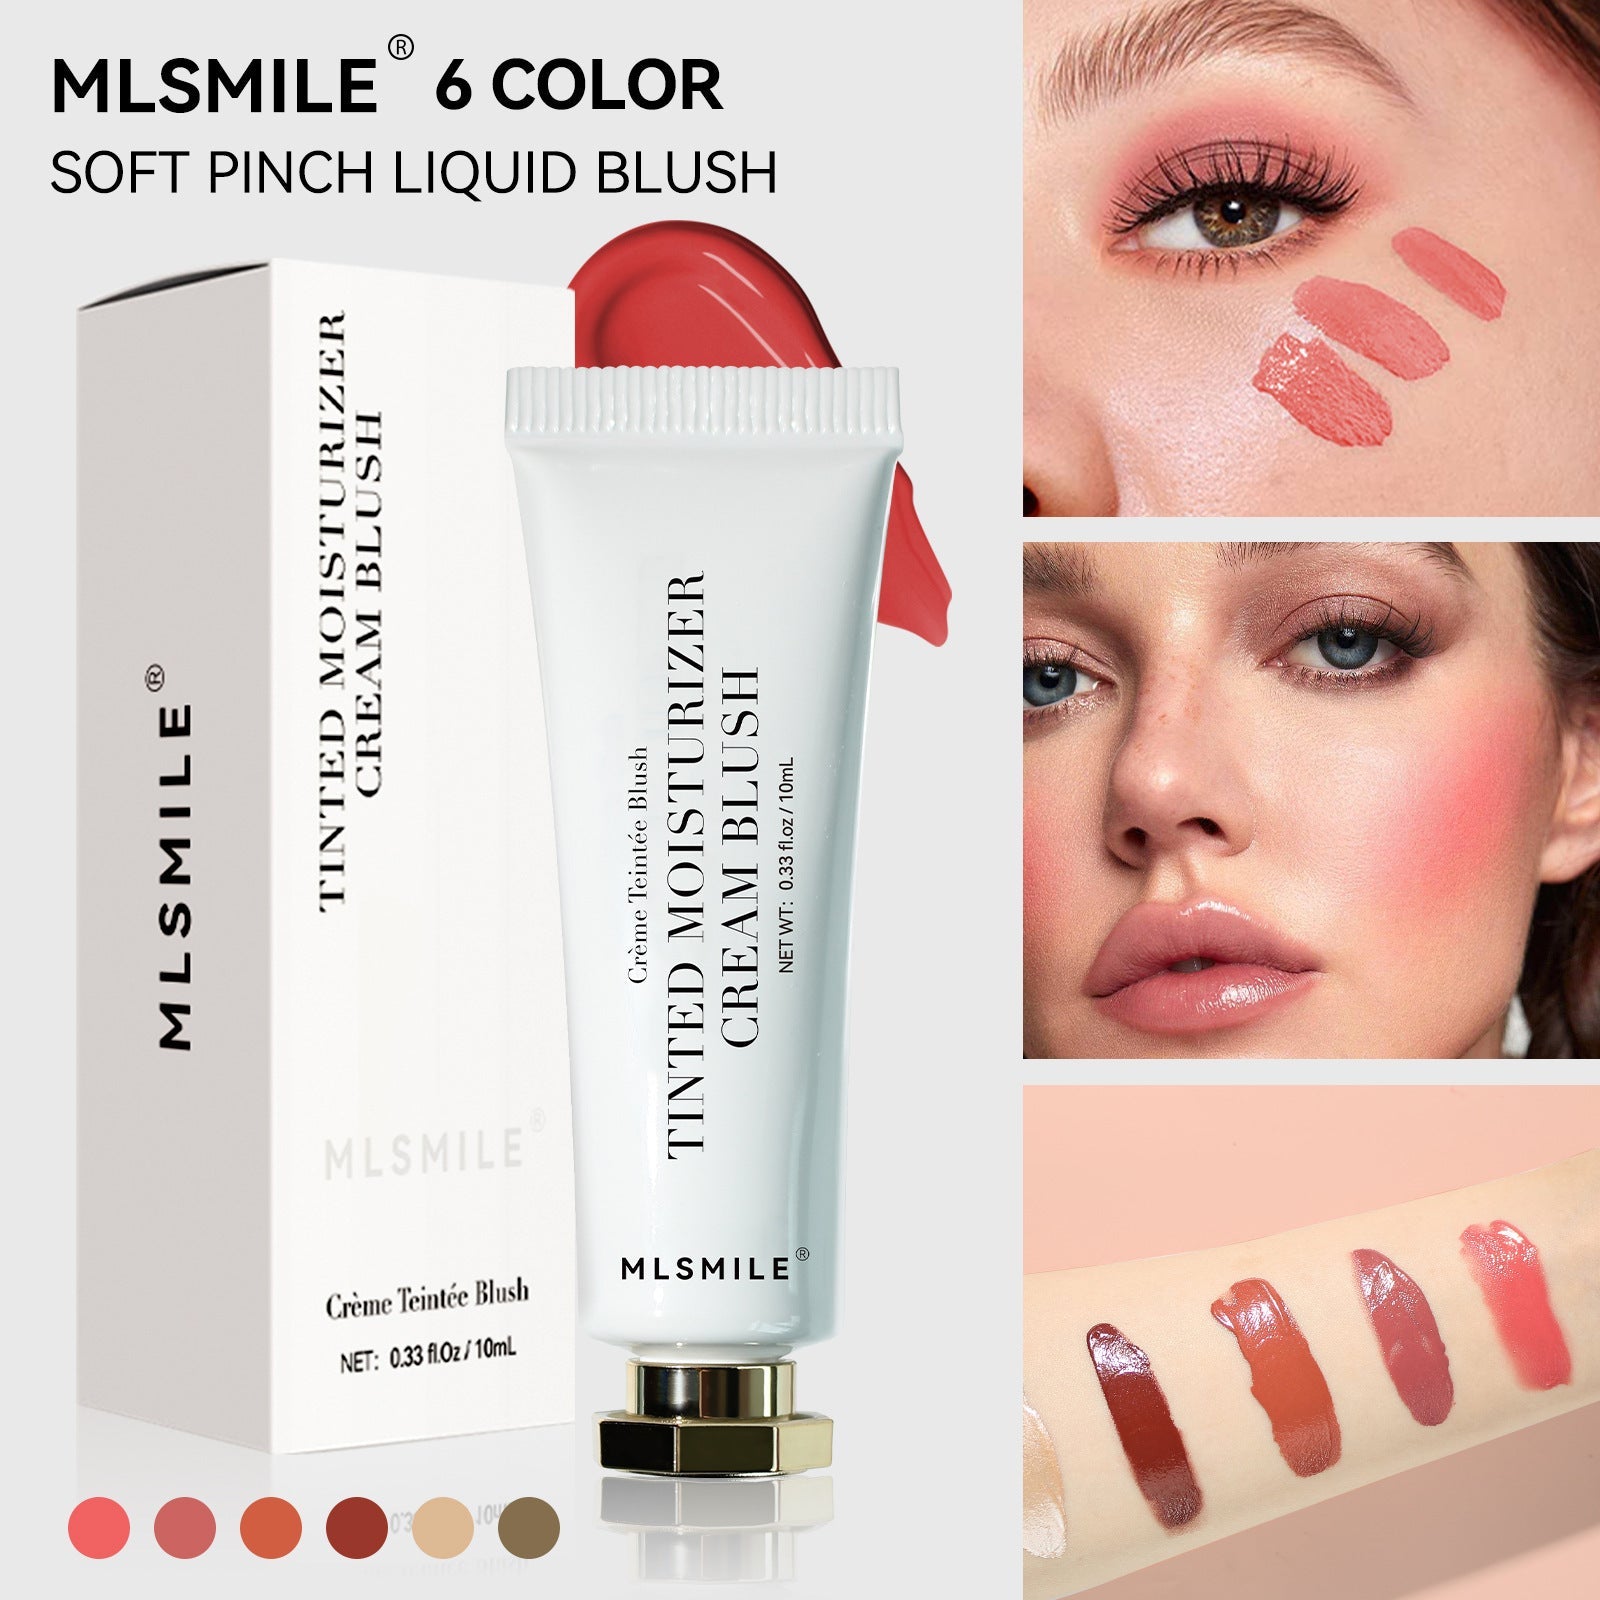 Natural Moisturizing Blush: Dual-Purpose Color for a Radiant Glow LA ROSE BEAUTY